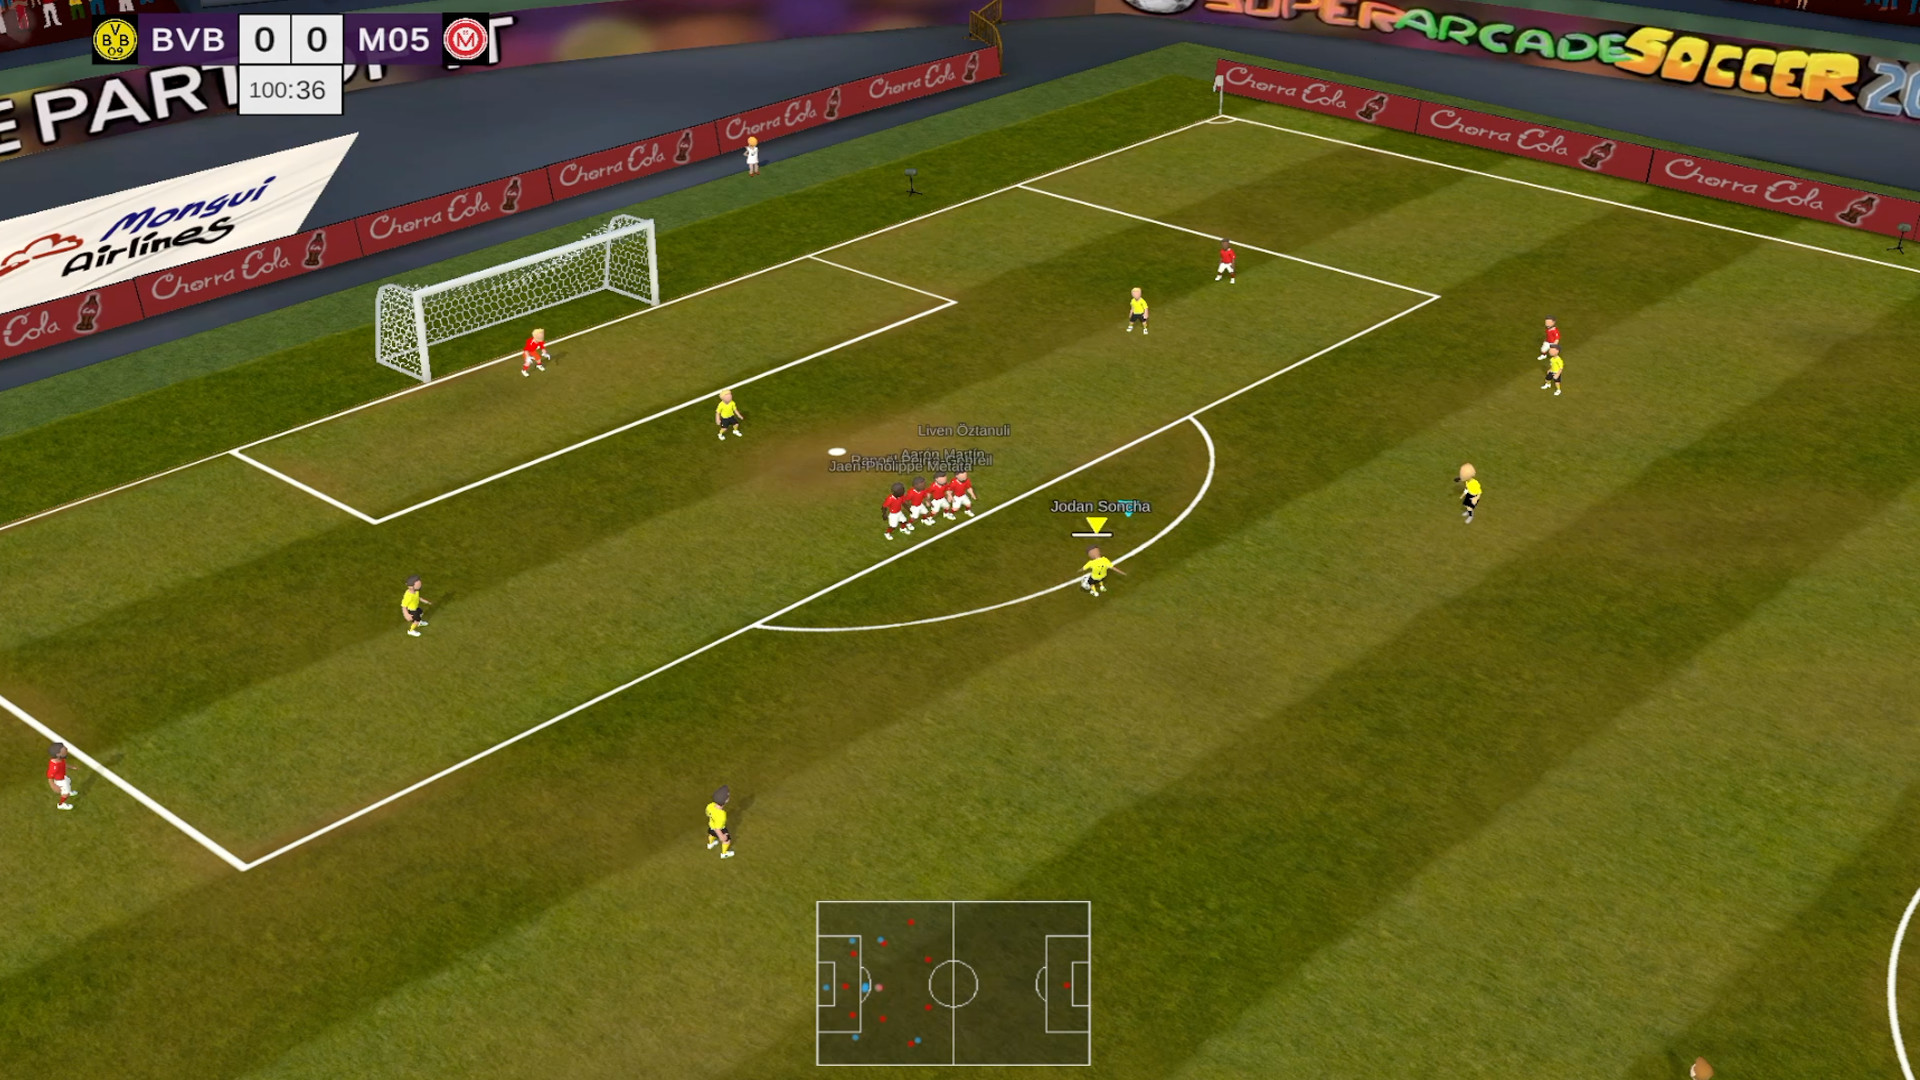 Super Arcade Soccer 2021 screenshot